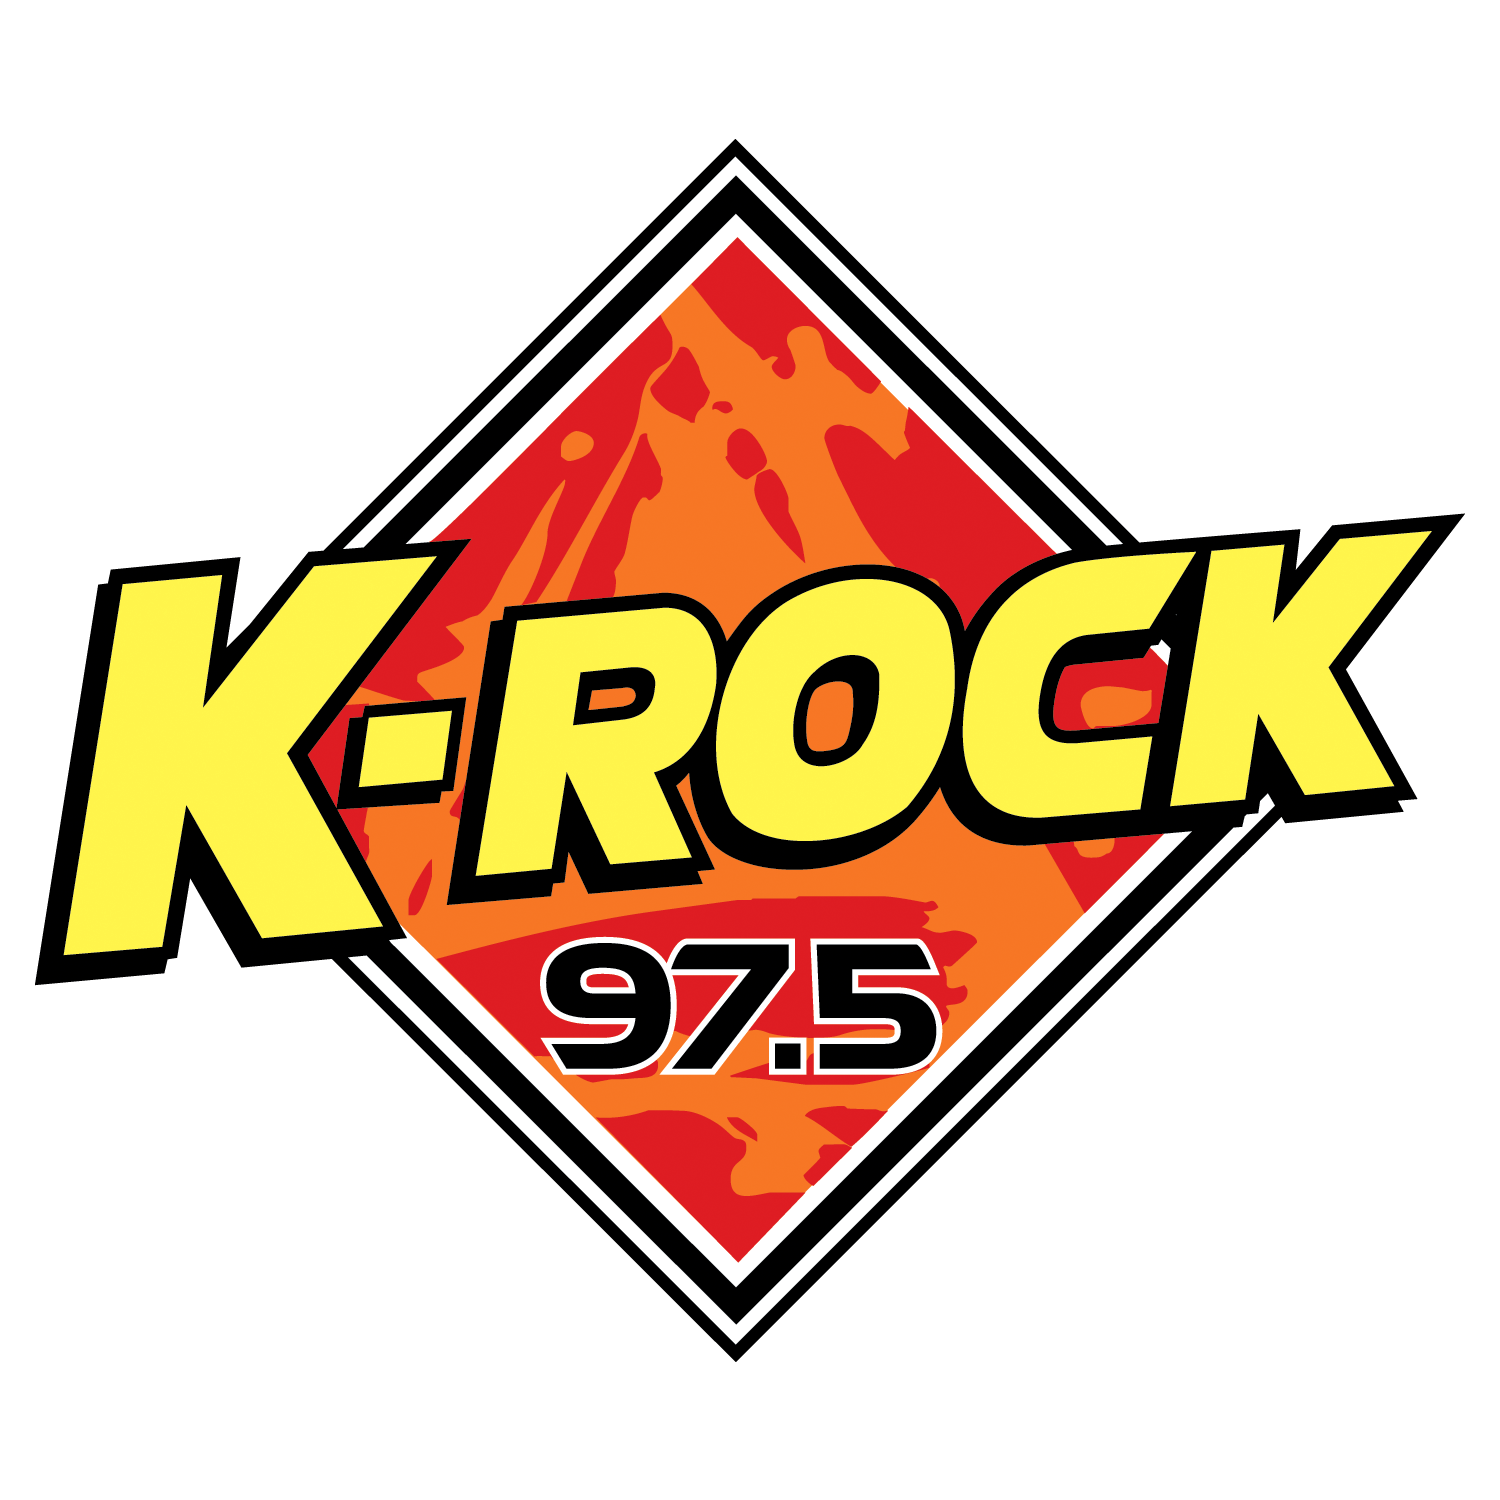 K-Rock Logo - 97.5 K-ROCK Logos | K-Rock 975